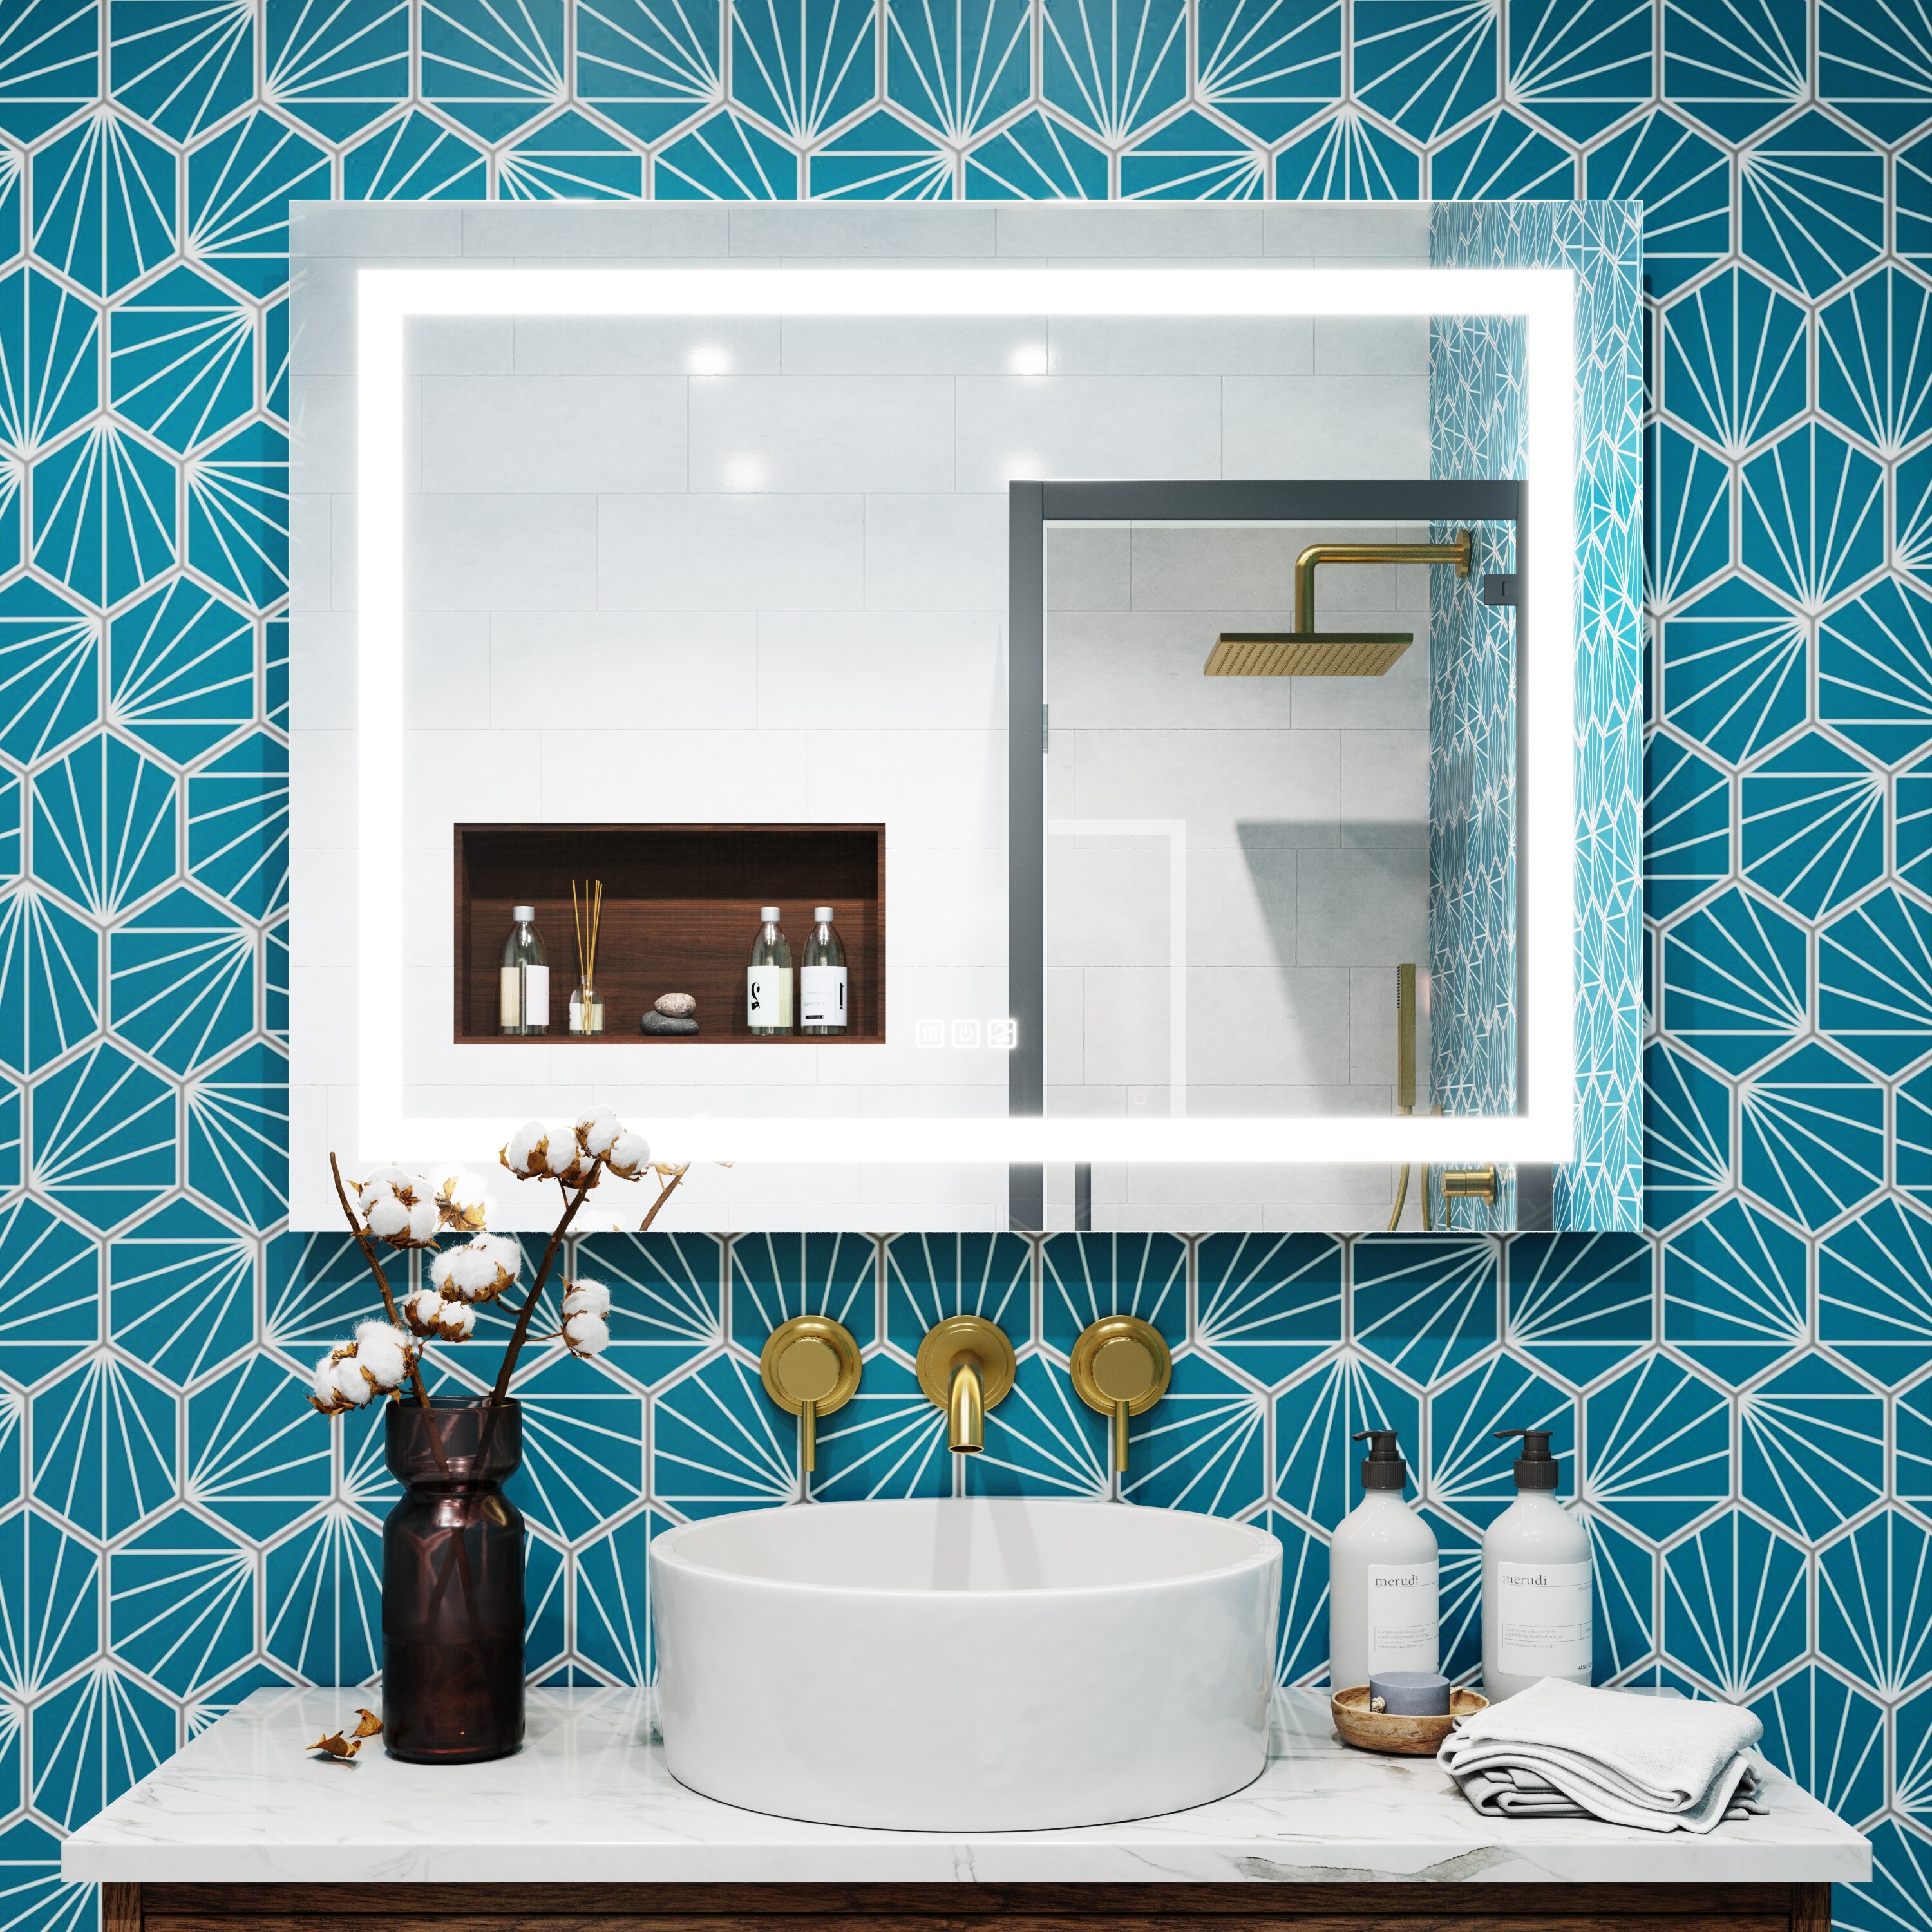 Details about   28x36 LED Illuminated Bath Vanity Mirror w/ Touch Sensor & Anti-fog 